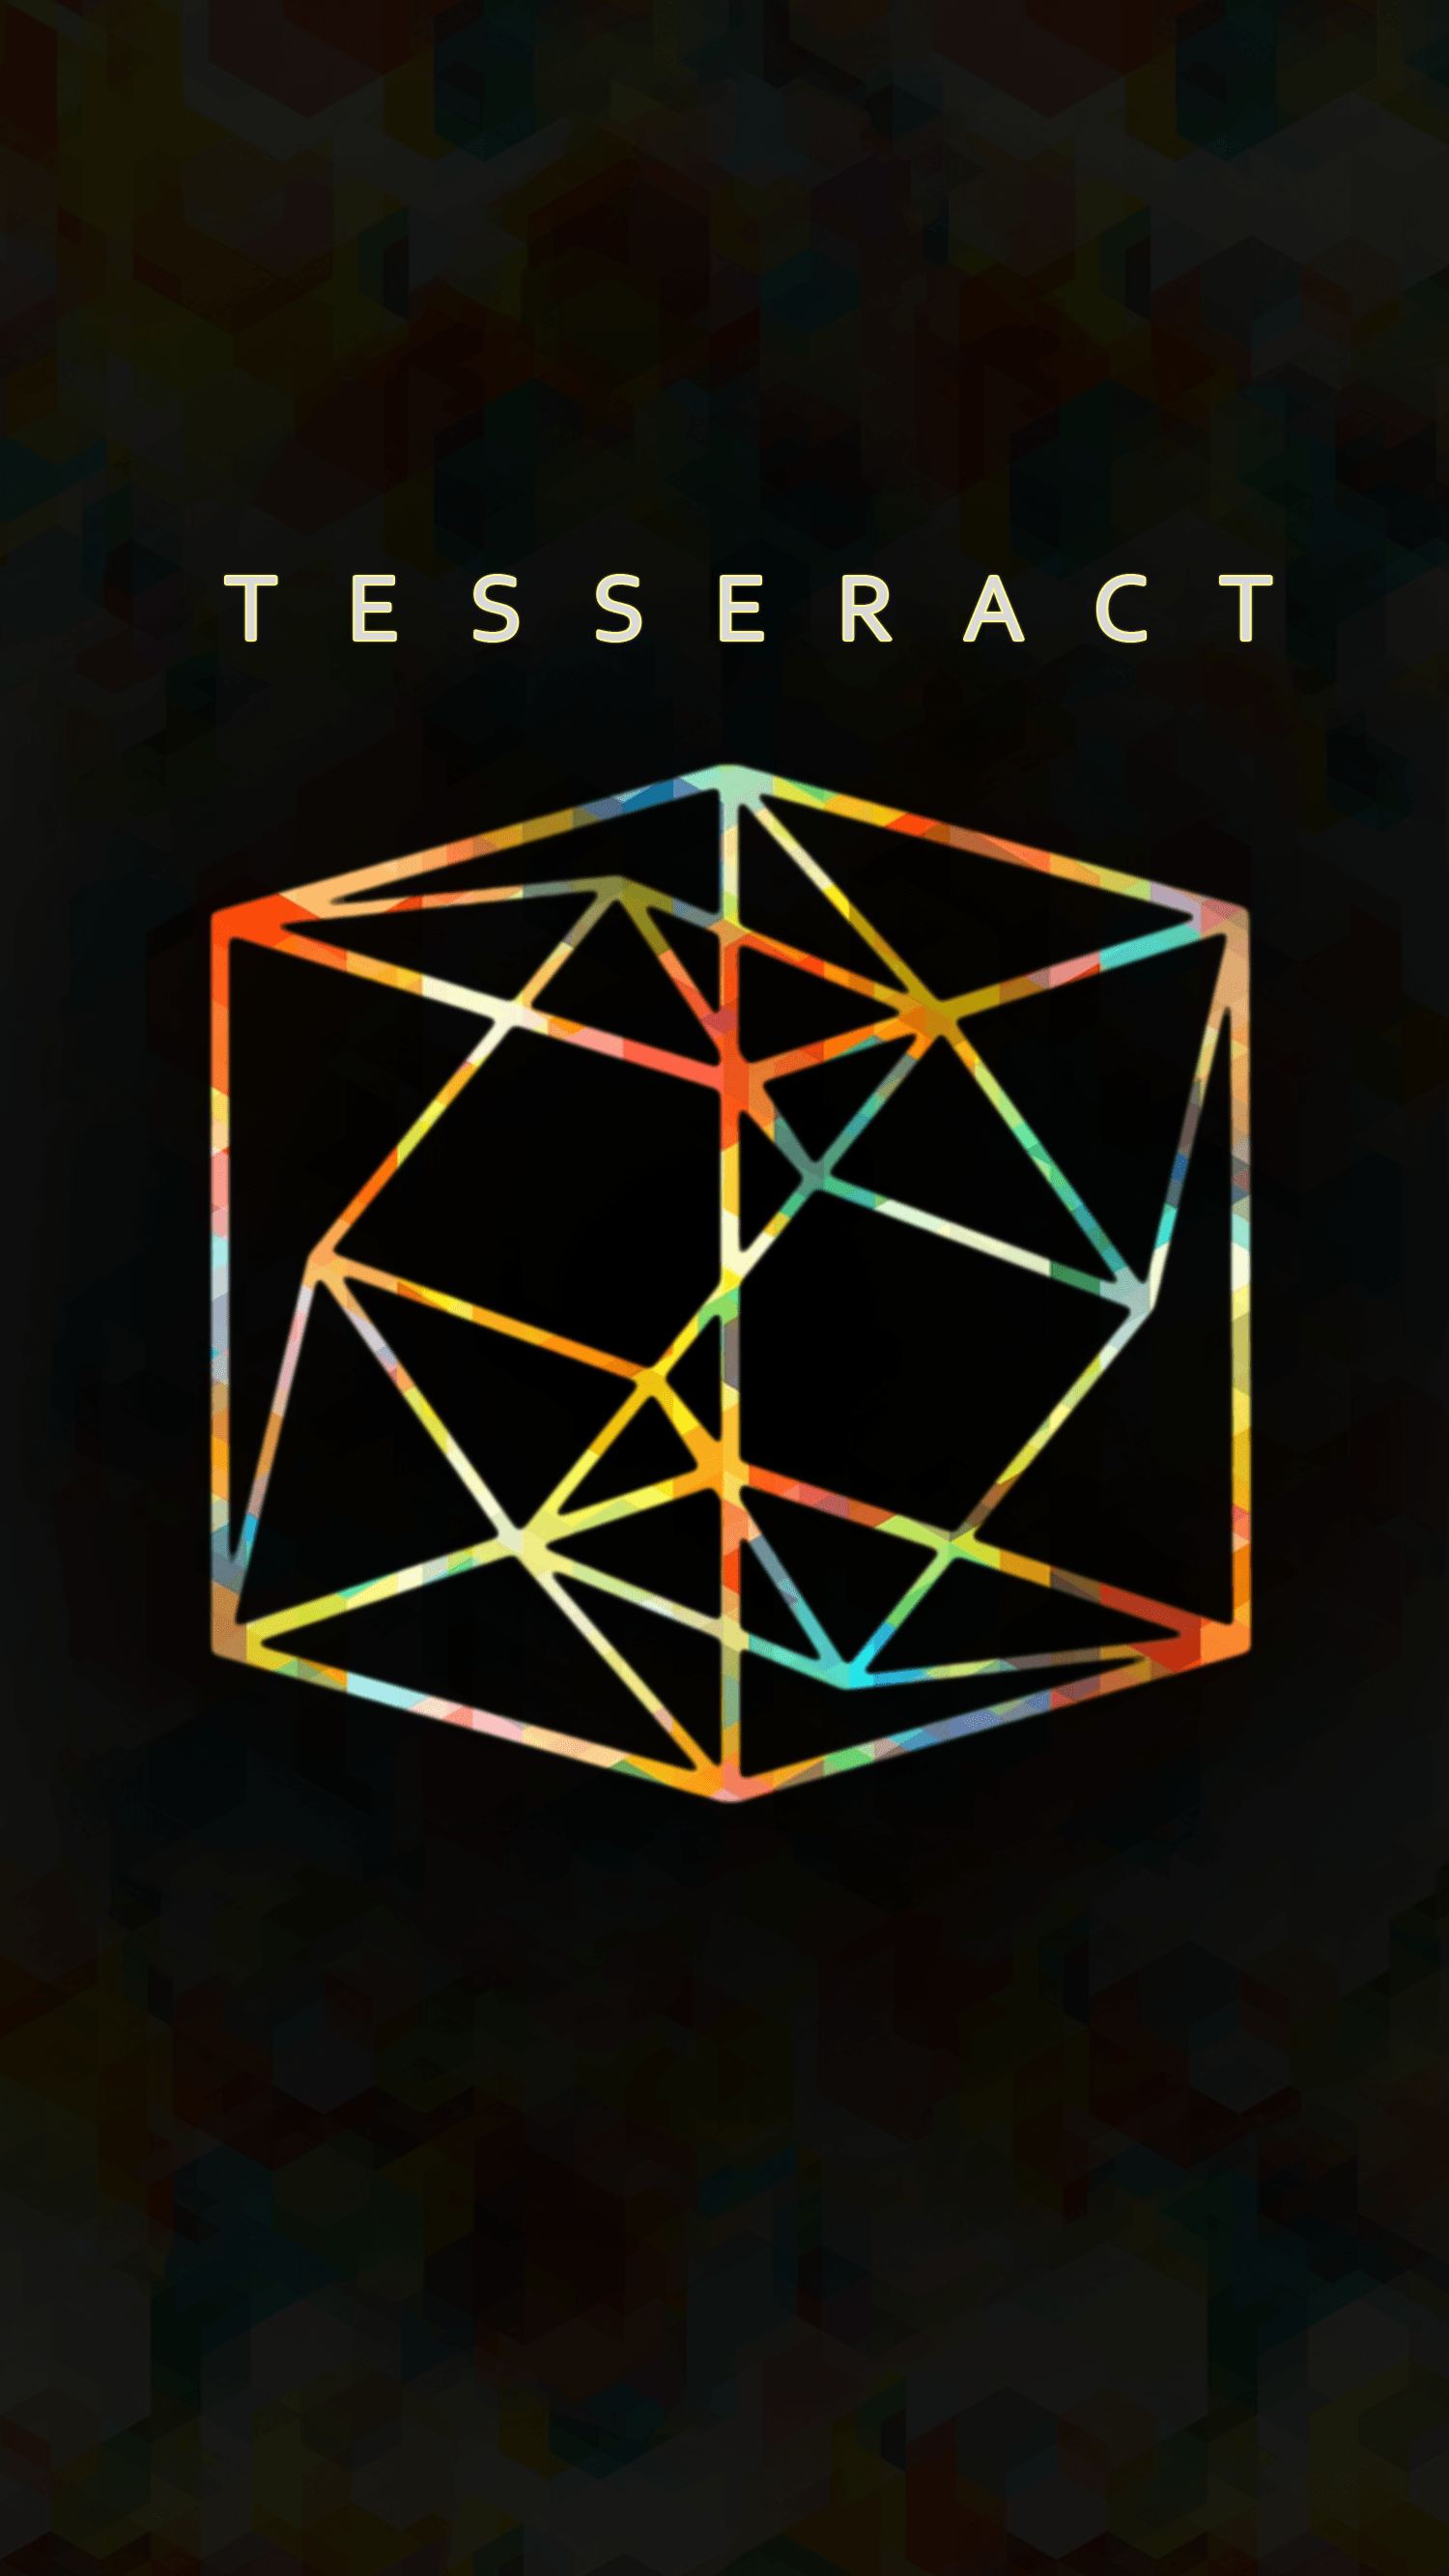 tesseract band logo